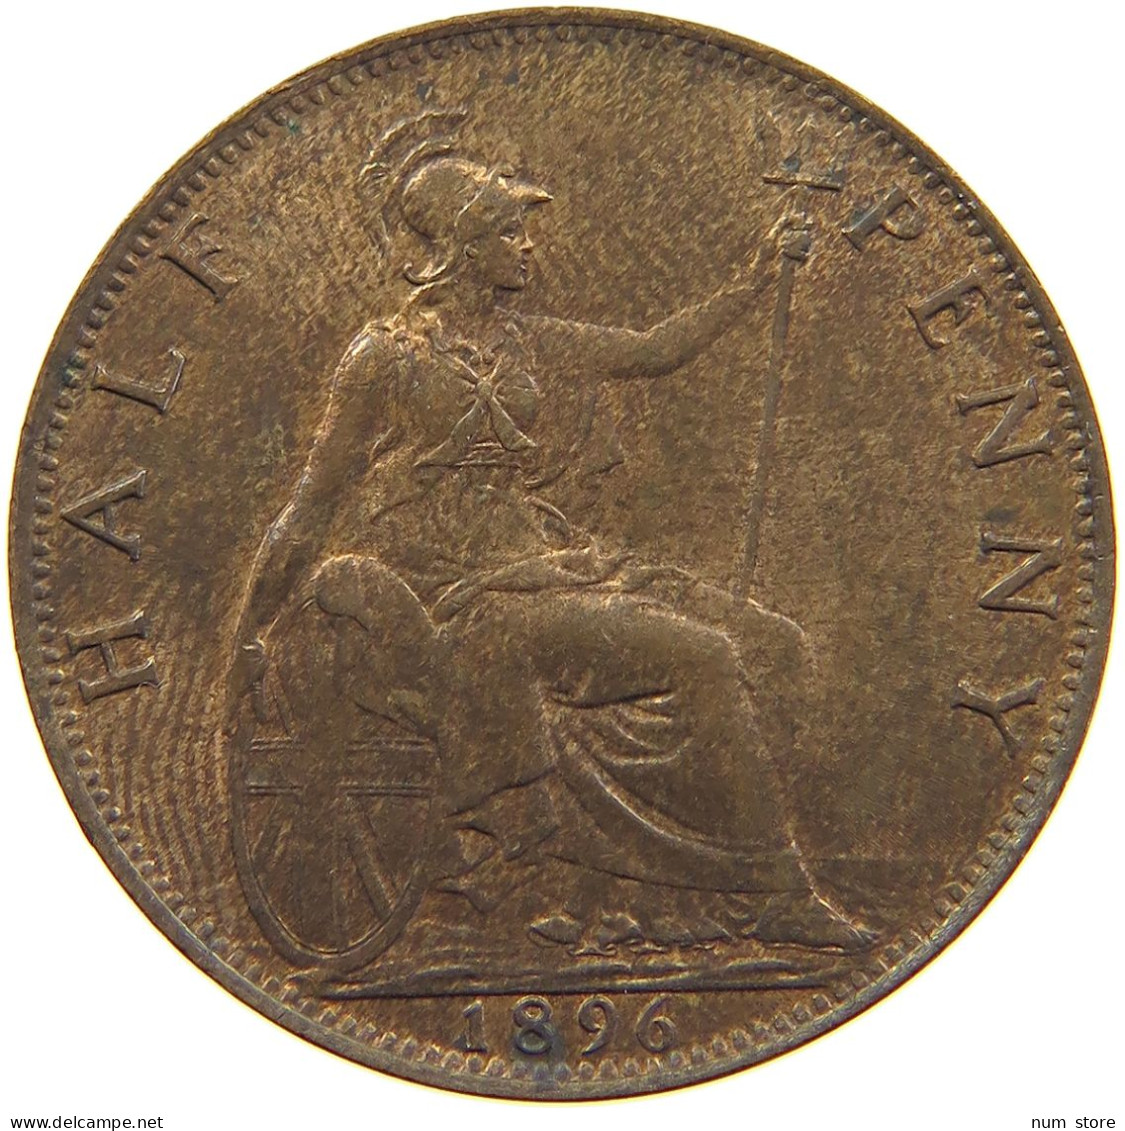 GREAT BRITAIN HALFPENNY 1896 Victoria 1837-1901 #t001 0393 - C. 1/2 Penny